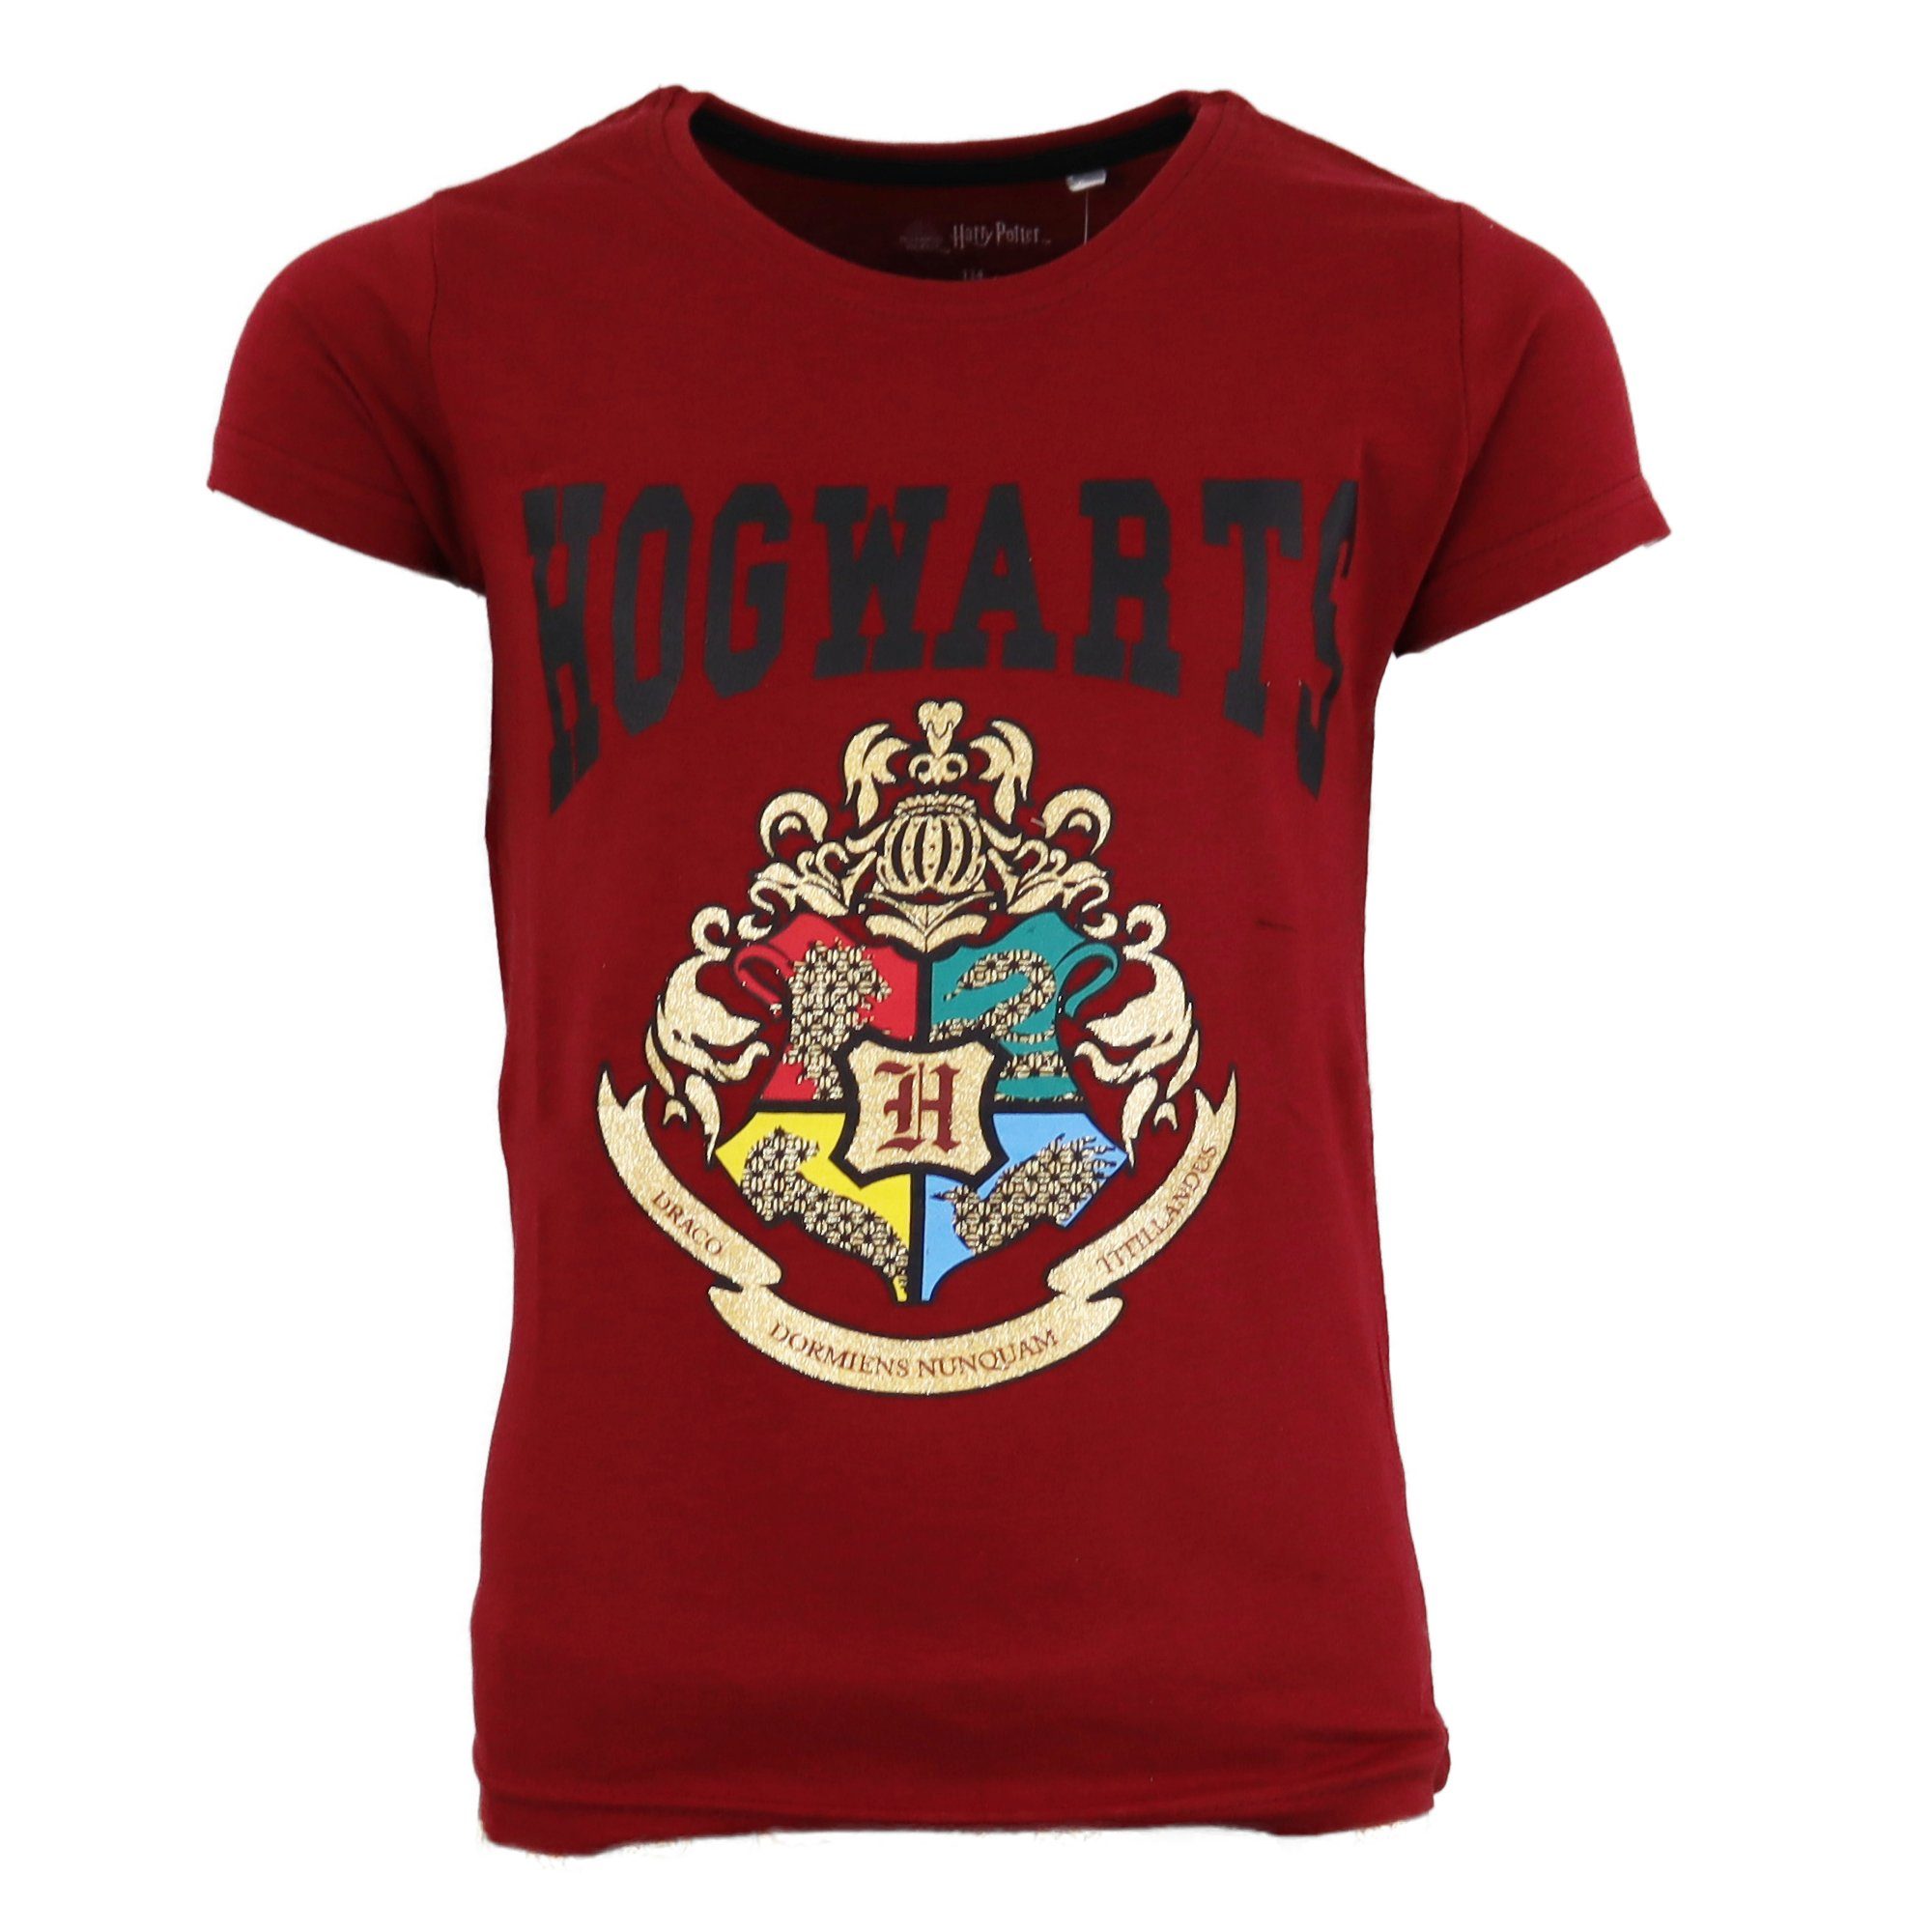 Harry Potter Print-Shirt Harry Potter Hogwarts Kinder Jugend T-Shirt Gr. 134 bis 164, 100% Baumwolle, Braun oder Weiß